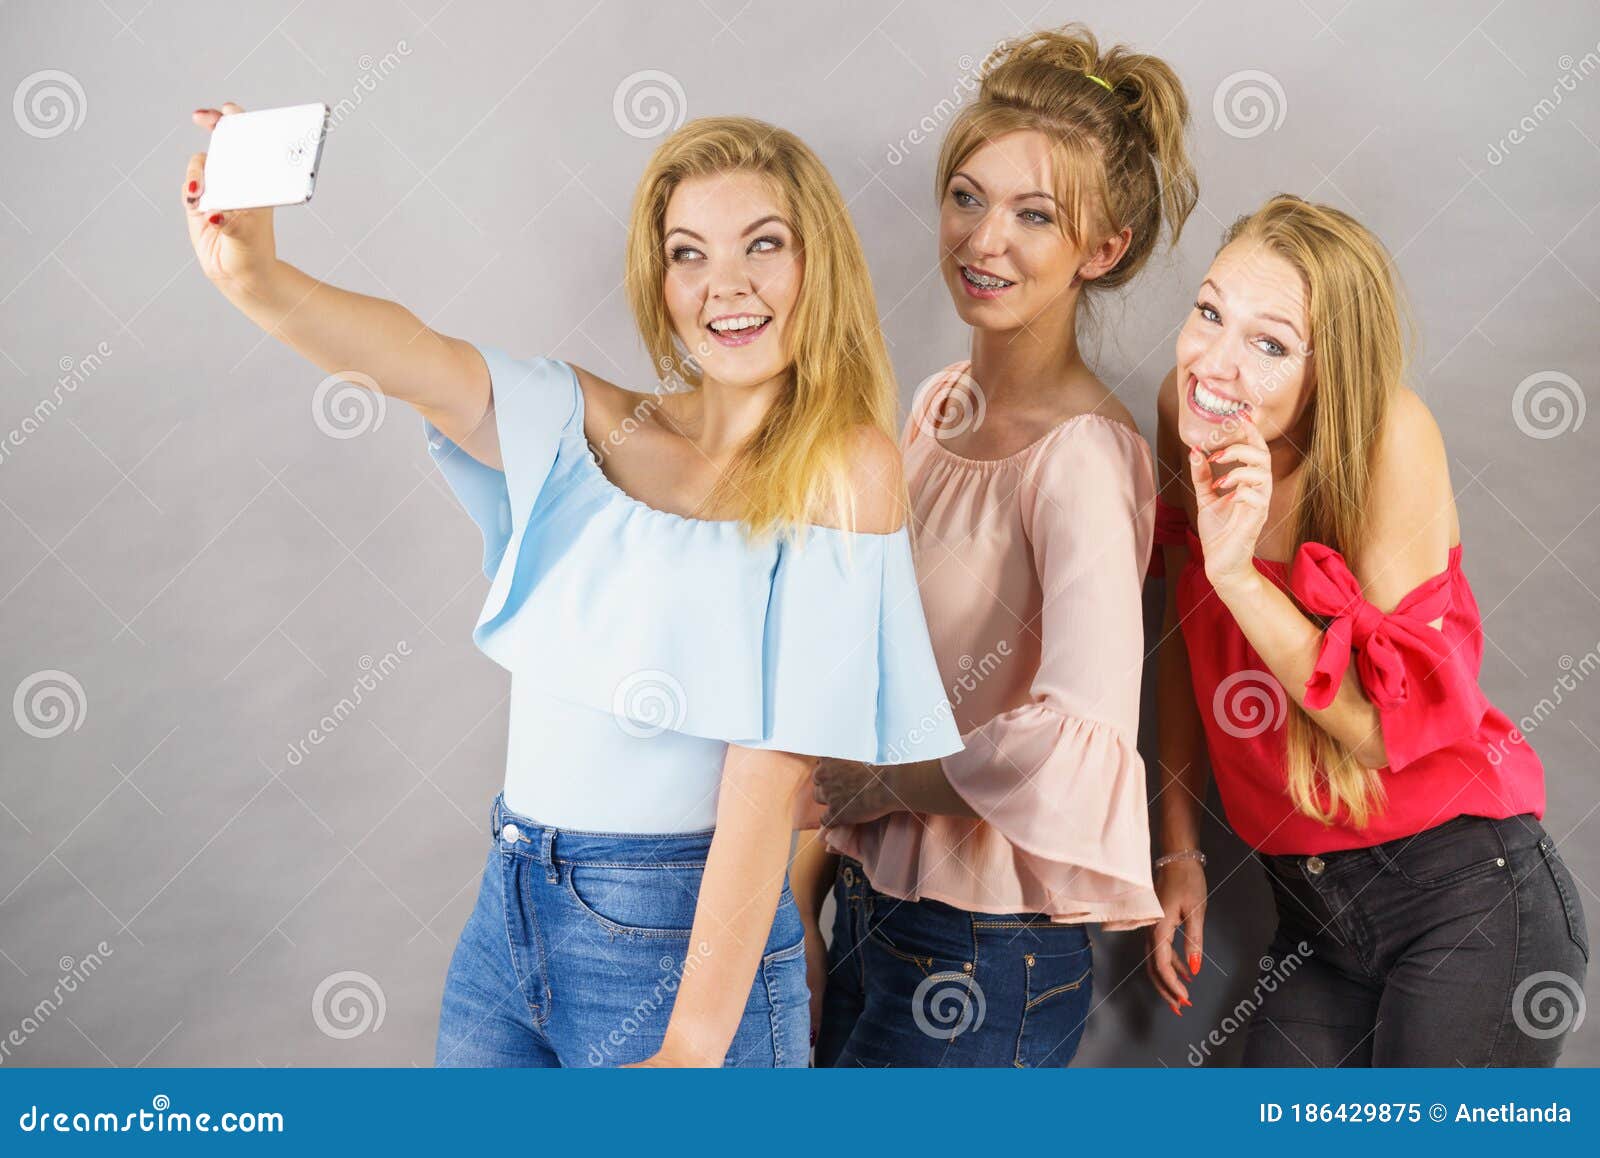 Fashionable Women Taking Selfie Stock Image - Image of self, group ...